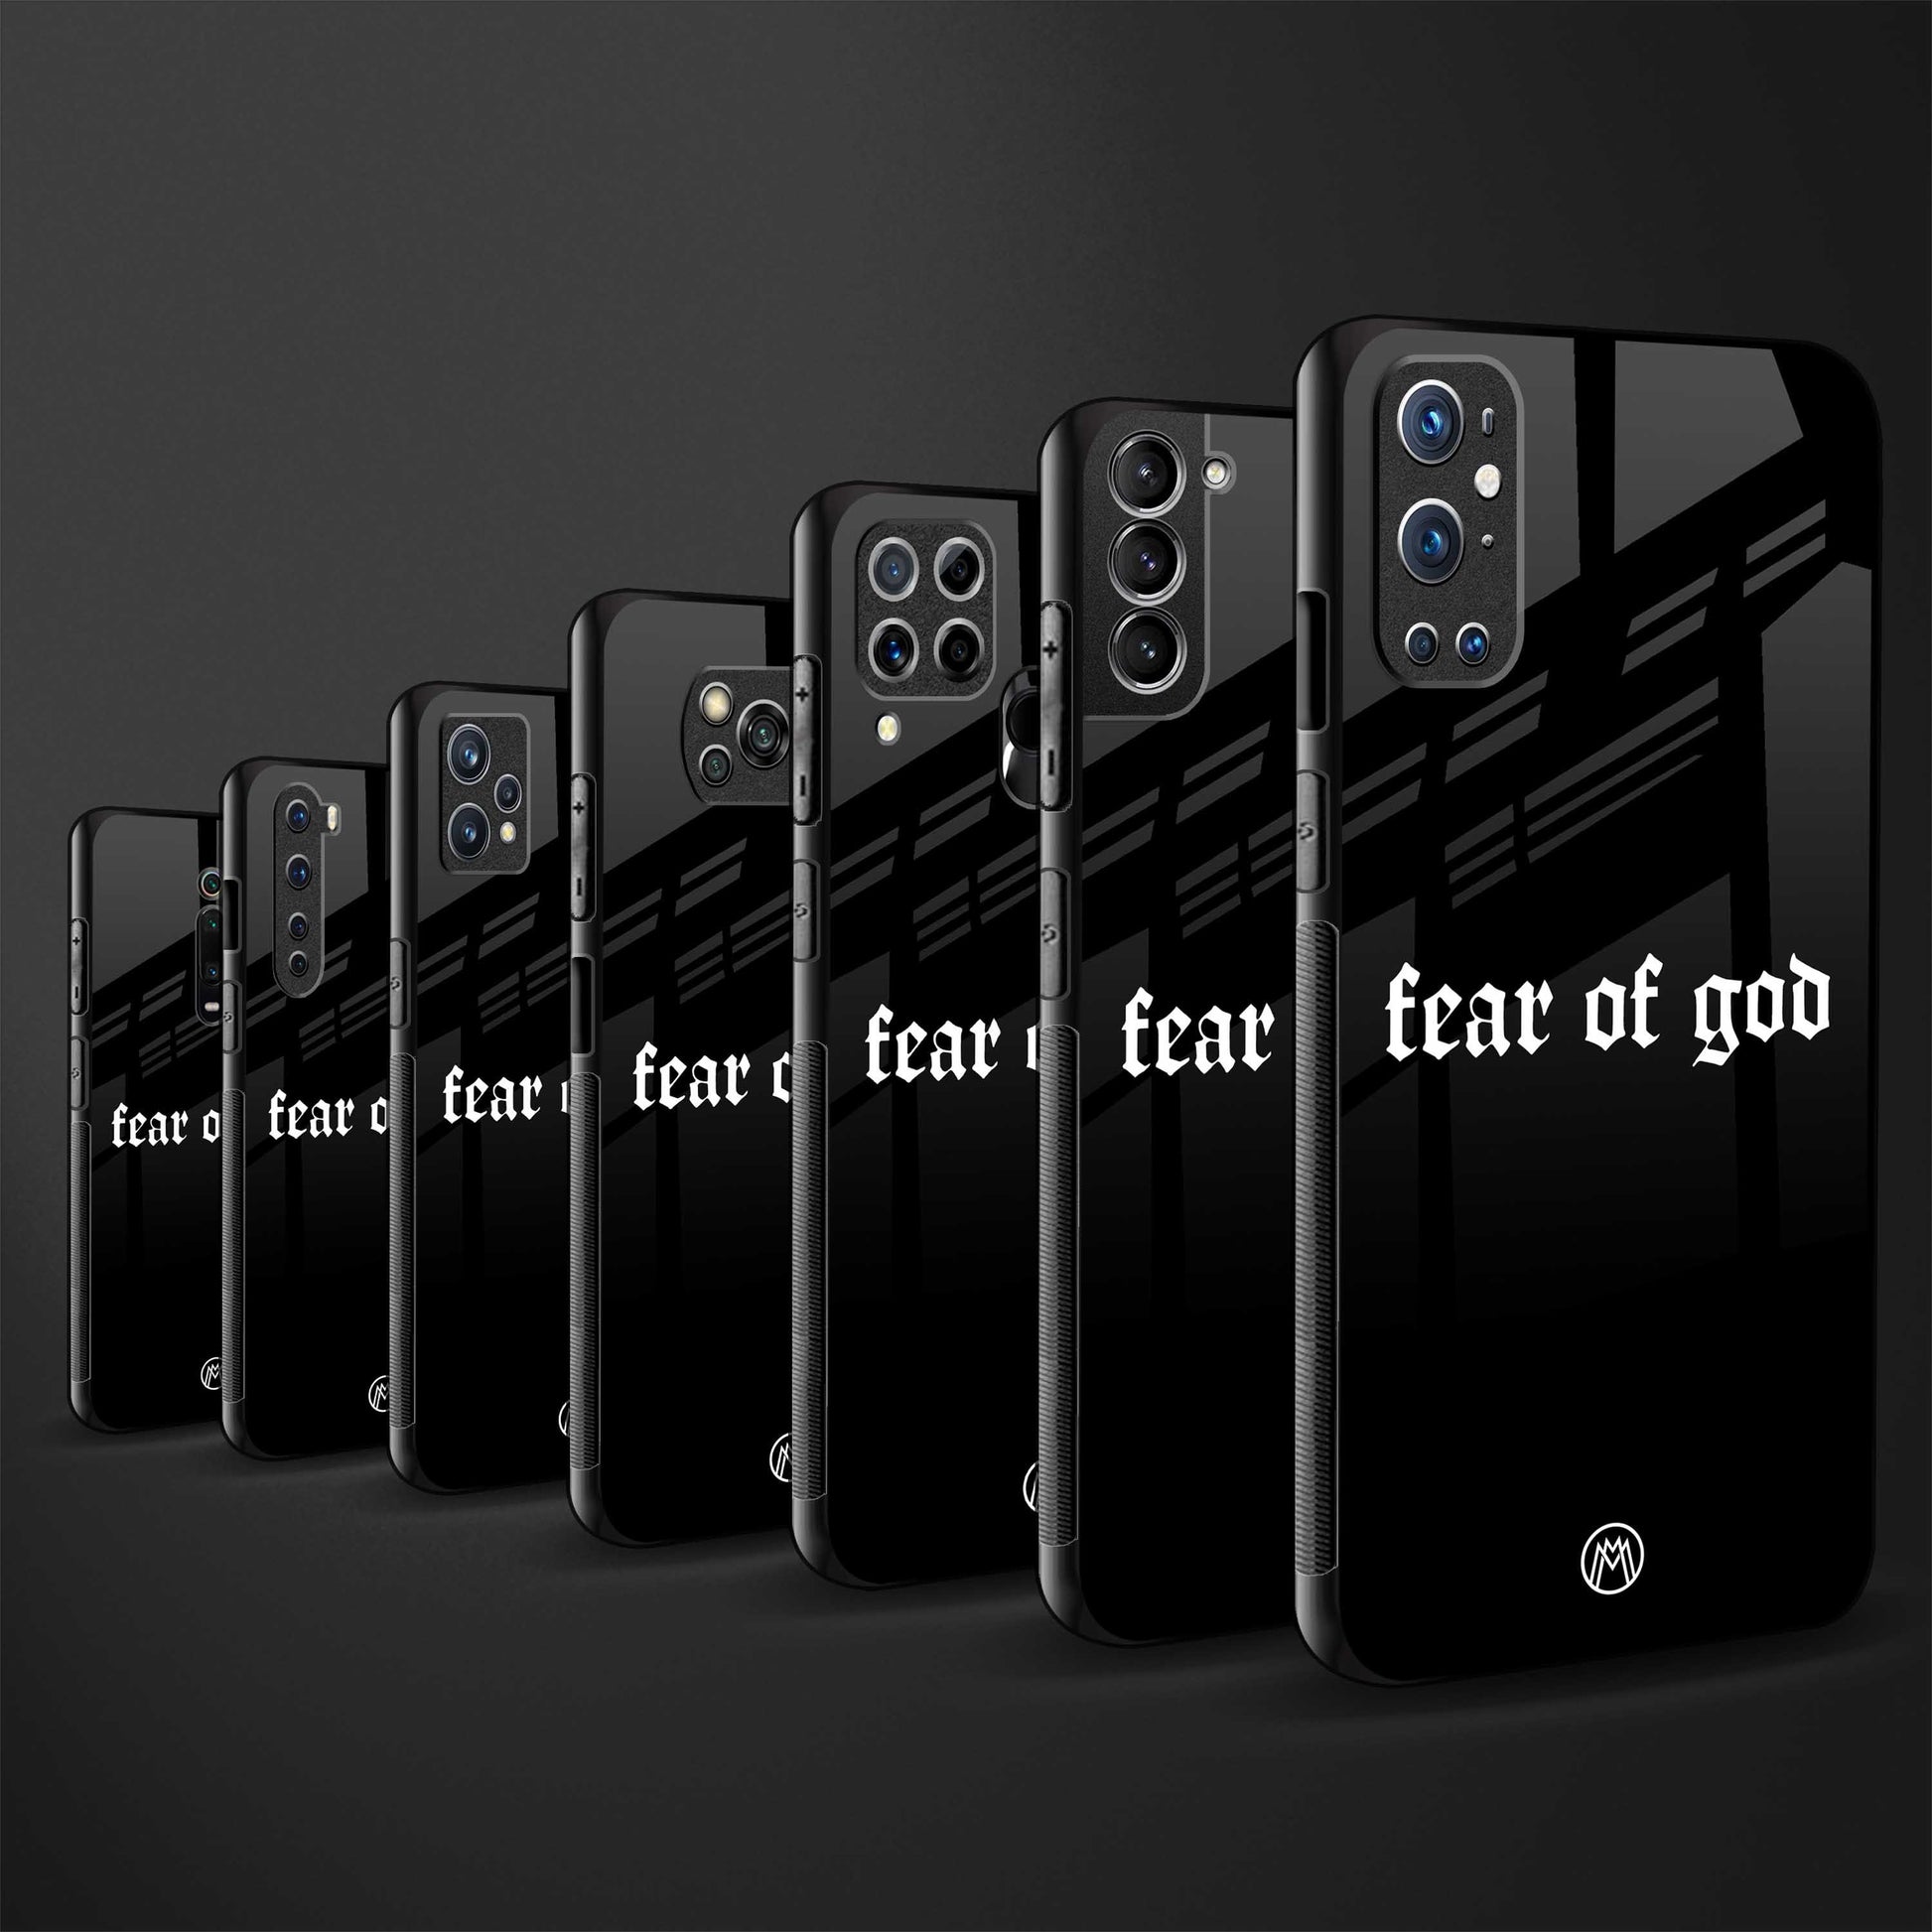 fear of god phone cover for vivo v11 pro